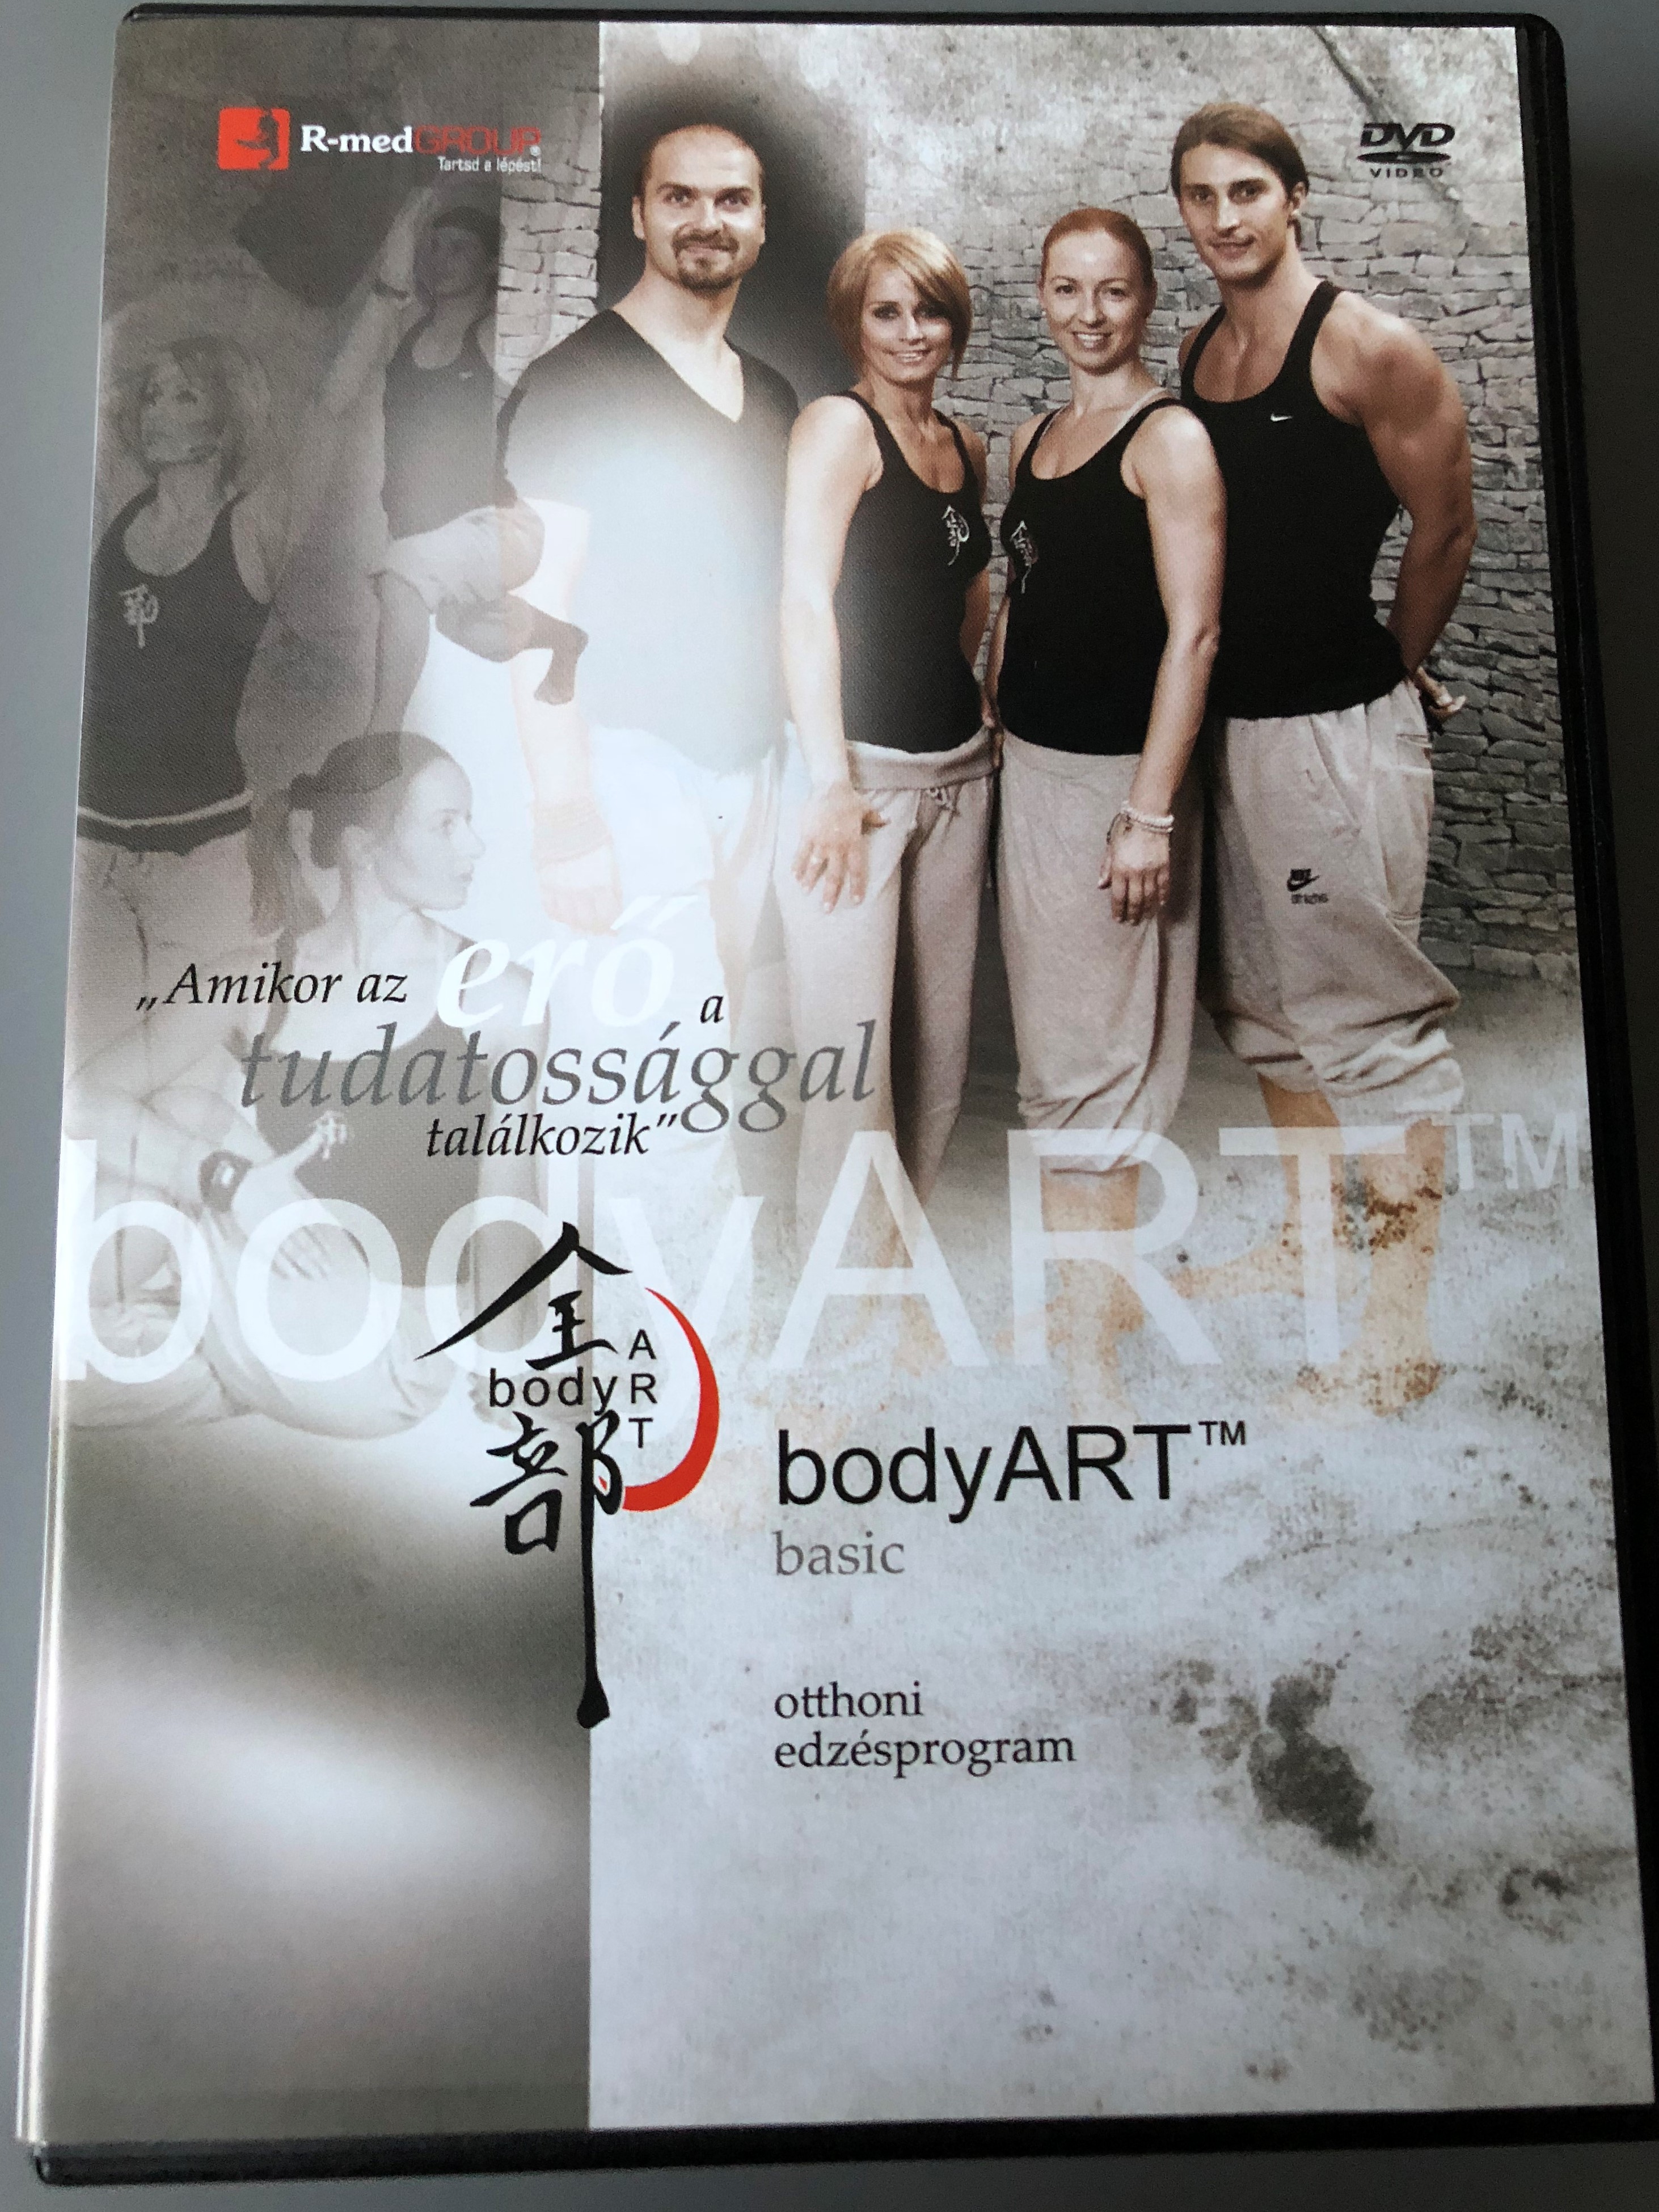 -bodyart-basic-otthoni-edz-sprogram-dvd-body-fitness-for-home-bodyart-team-borsodi-bal-zs-nagy-dorka-lencs-s-rita-f-zessy-bal-zs-1-.jpg